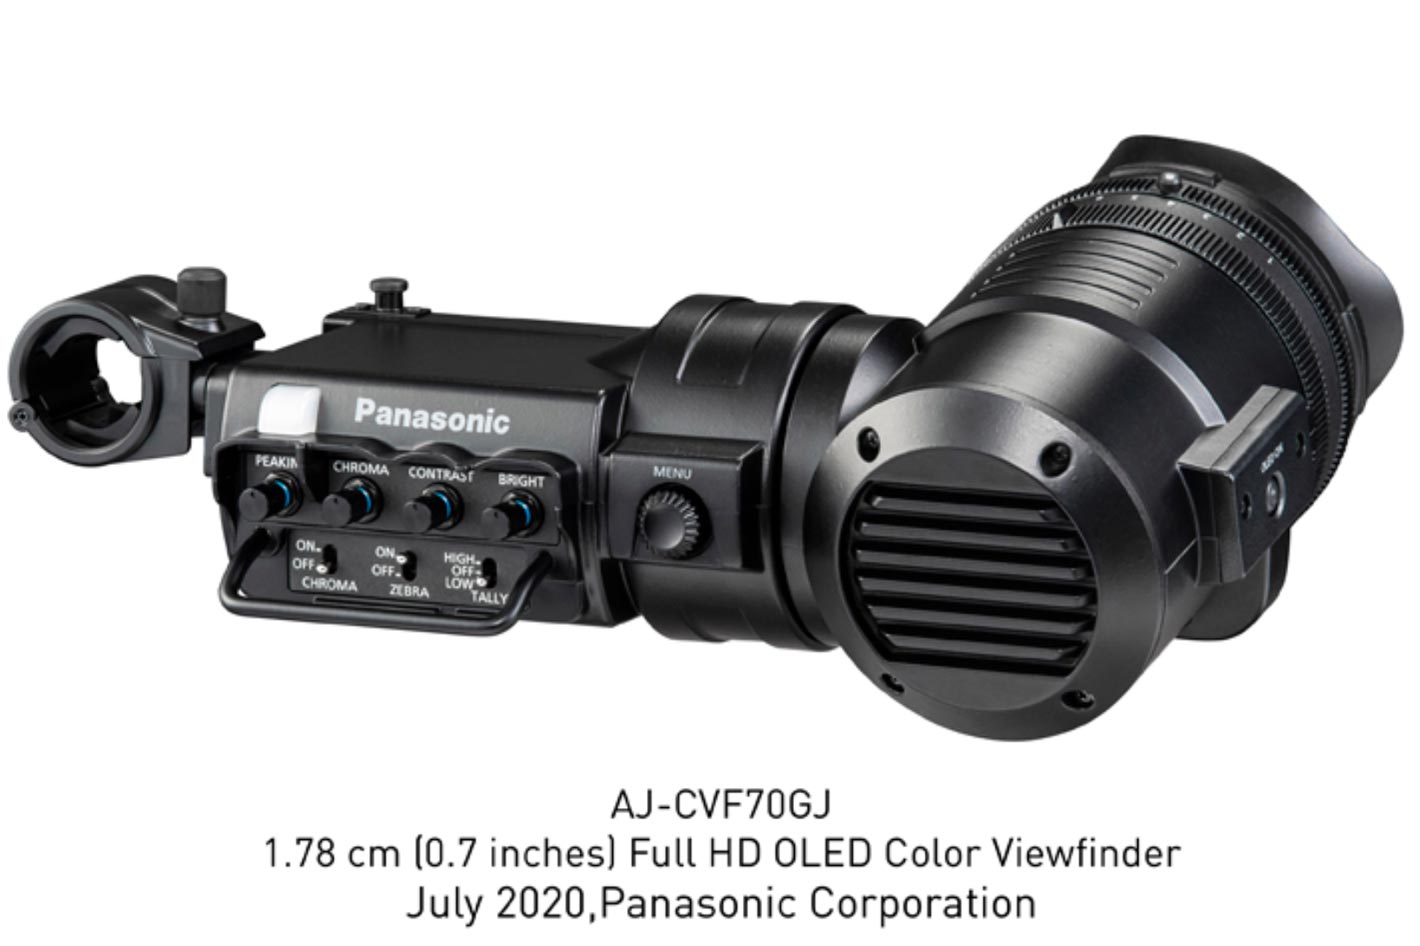 Panasonic AK-UC3300 studio camera, a future-proof solution